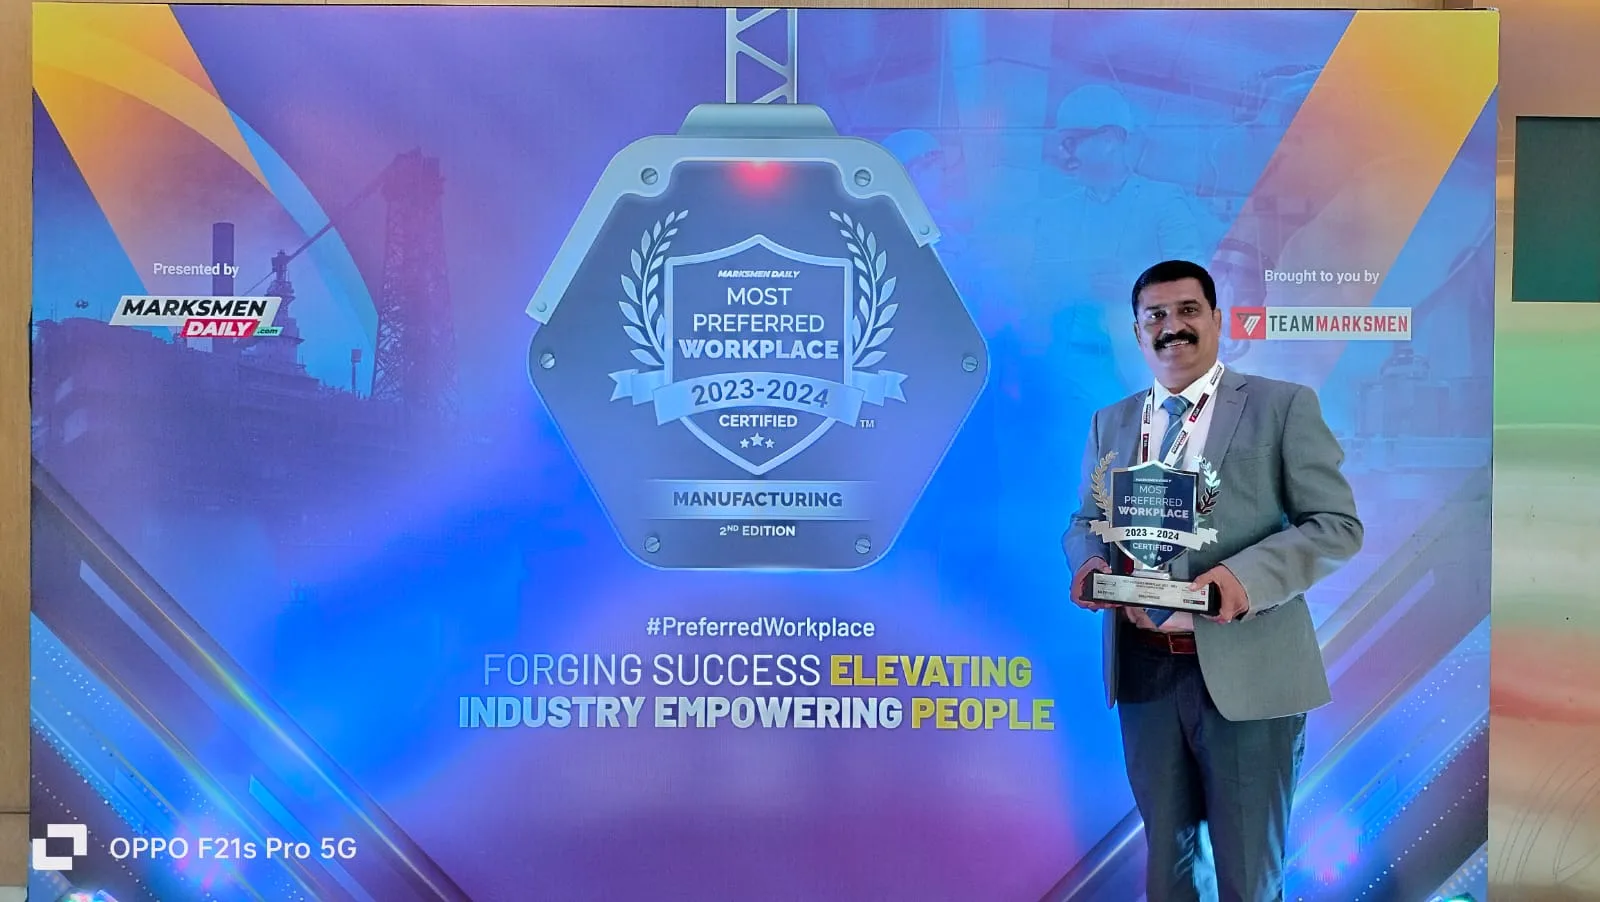 Viraj Profiles Celebrates Prestigious Recognition as "Most Preferred Workplace" in Manufacturing